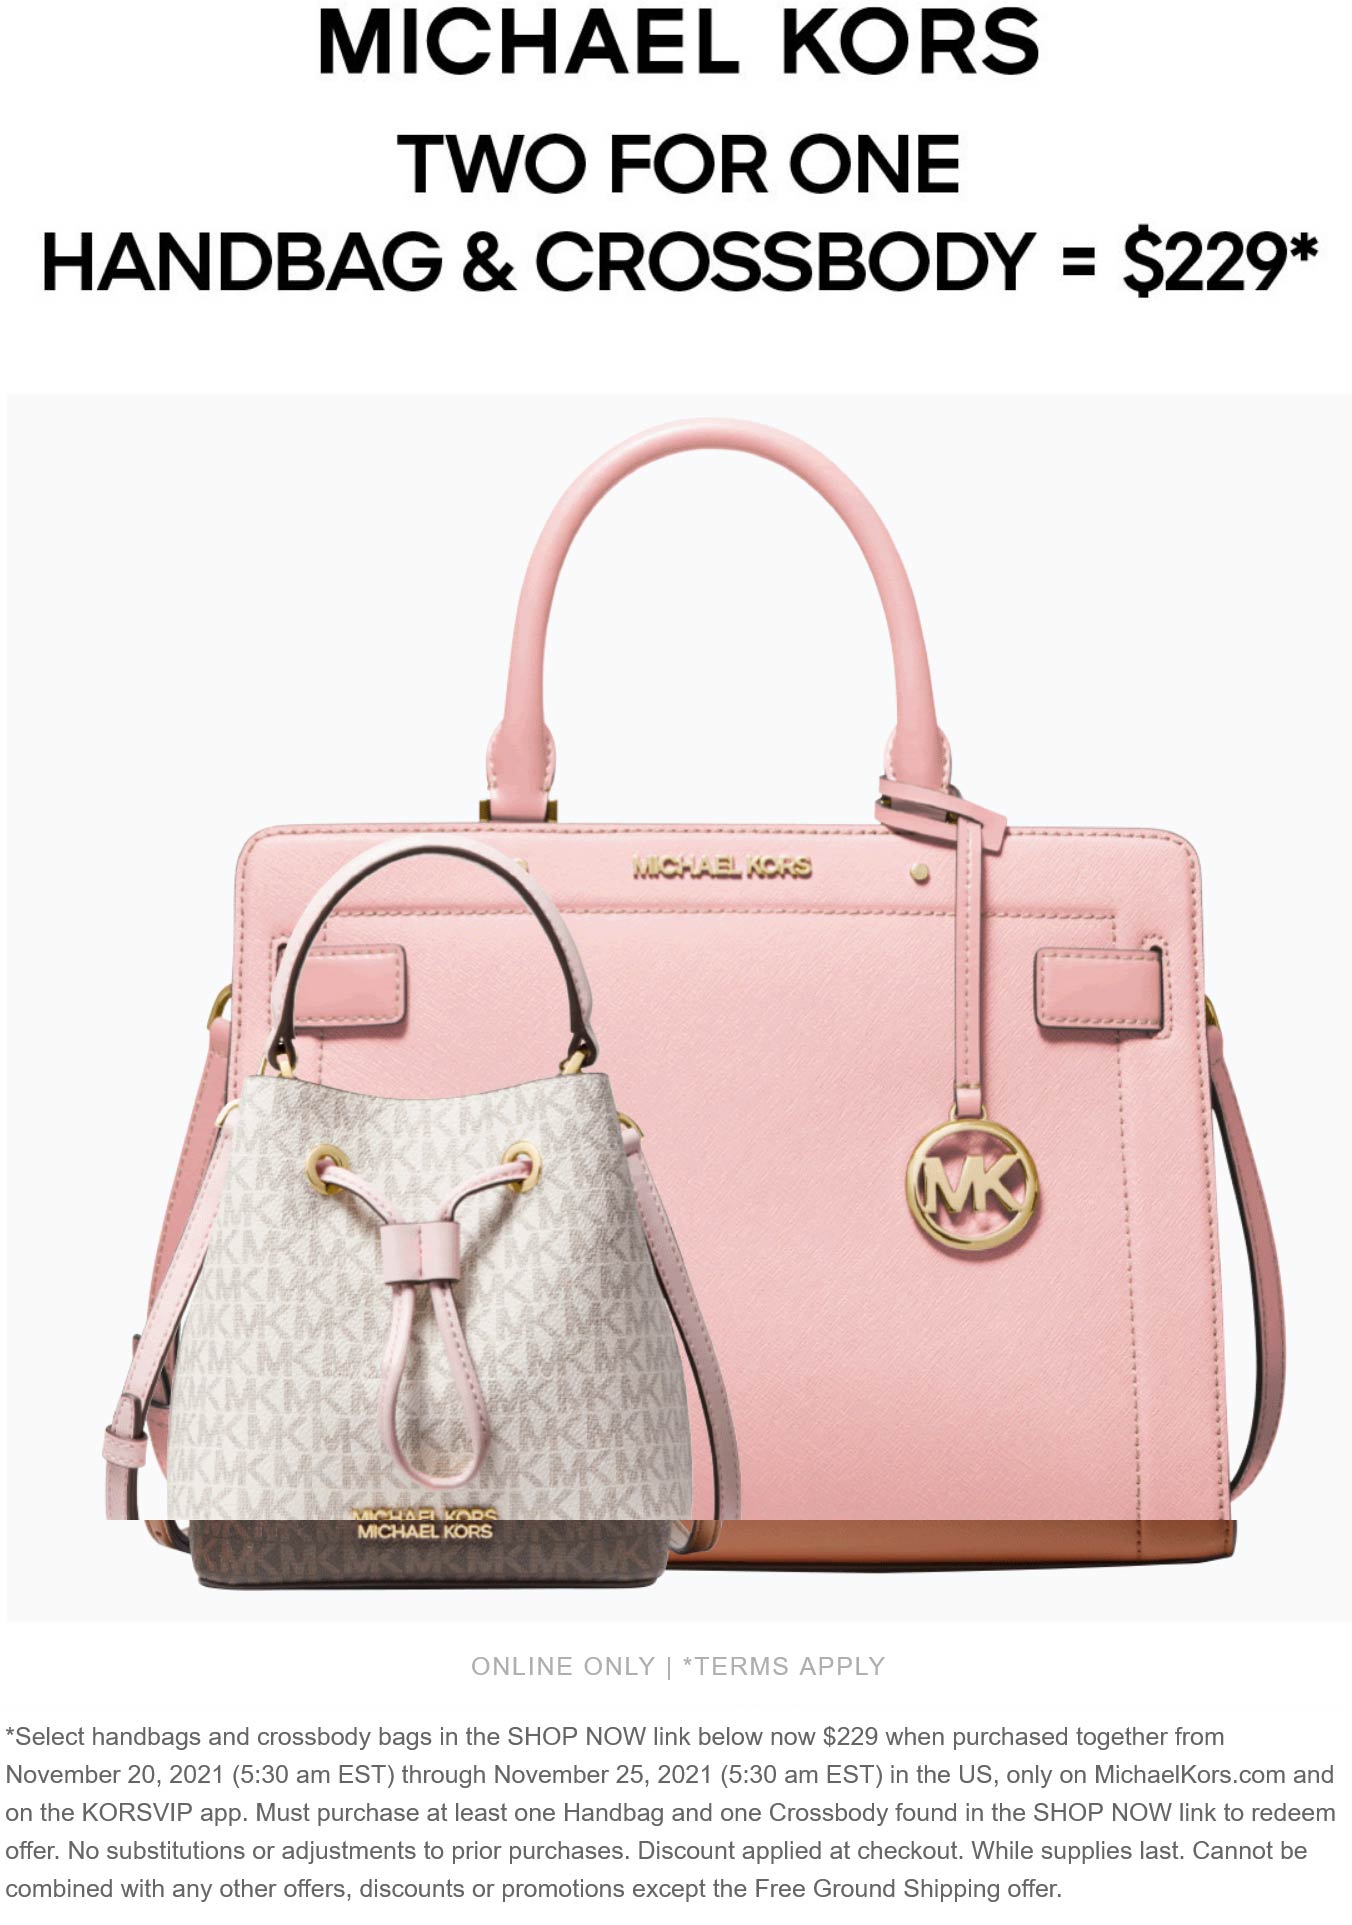 Michael Kors stores Coupon  Handbag & crossbody = $229 online at Michael Kors #michaelkors 